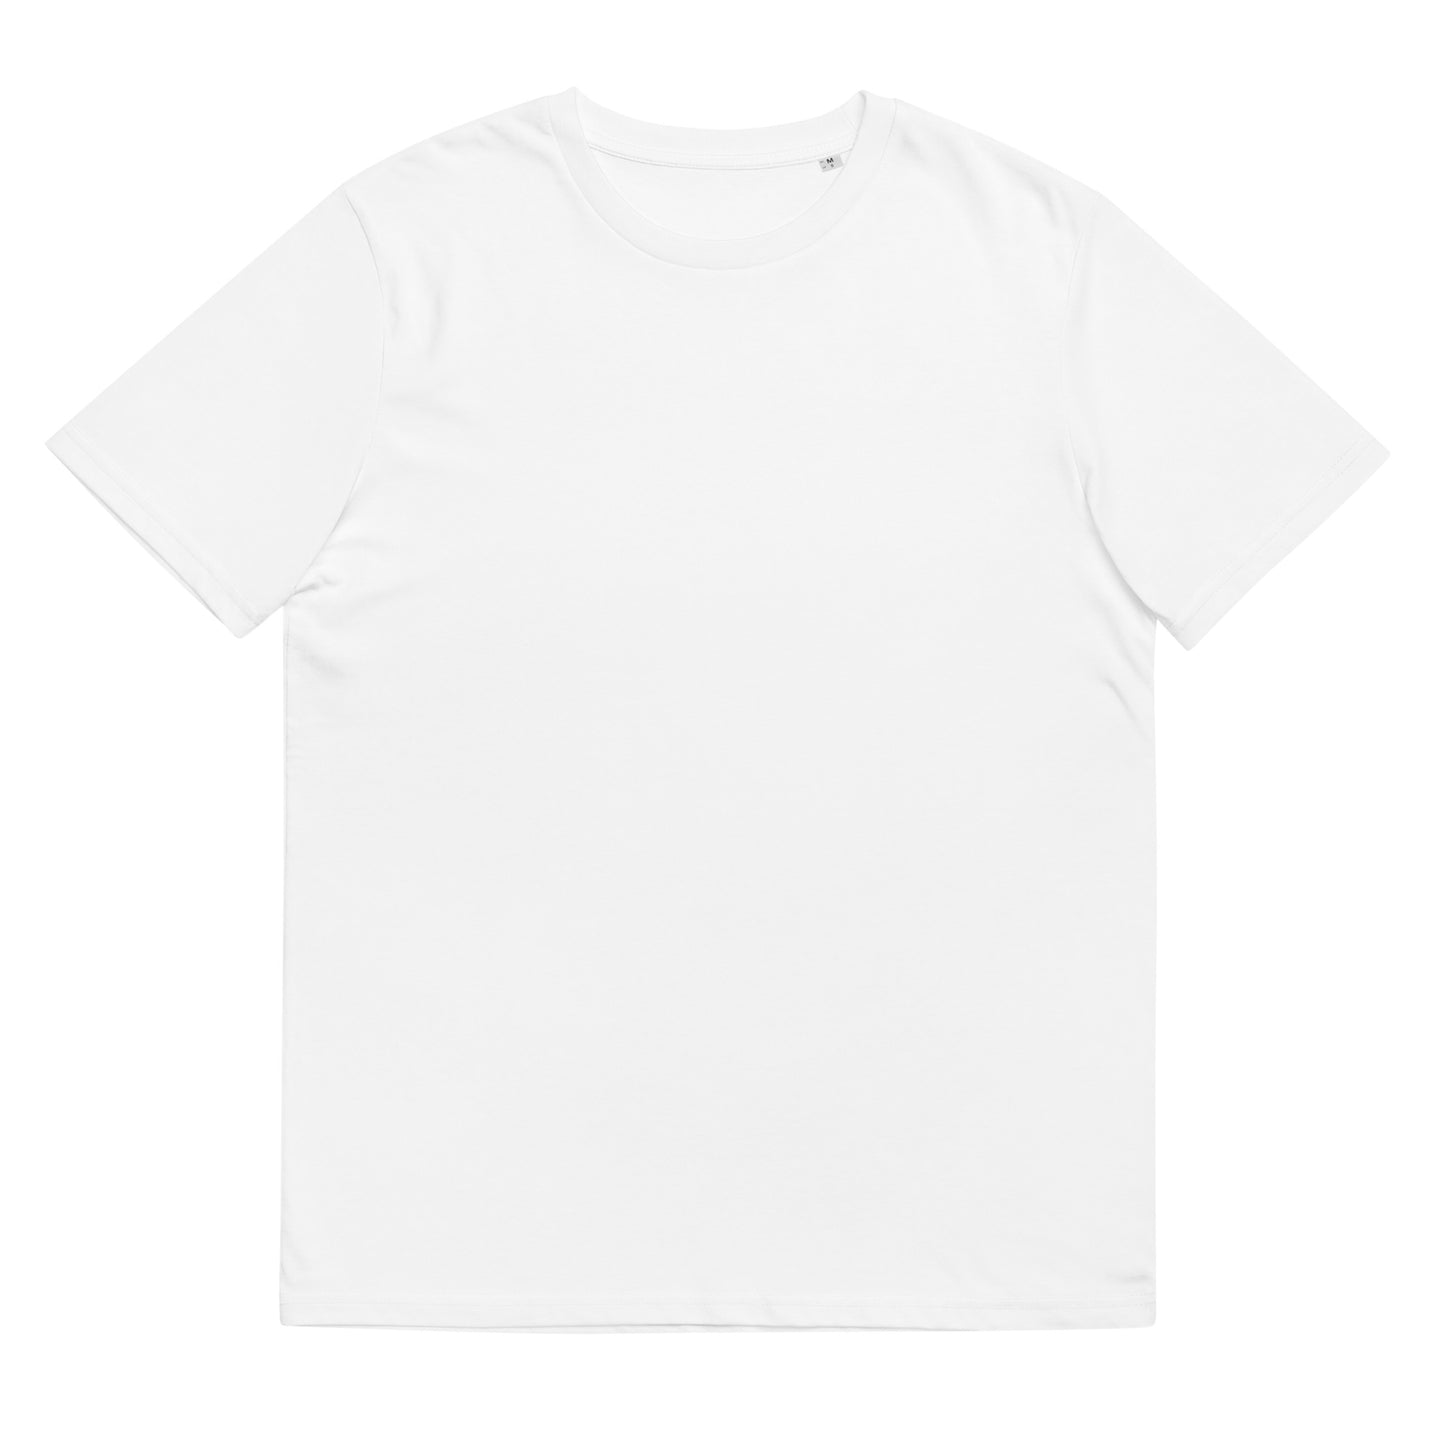 Unisex organic cotton t-shirt - Everyday is new beginning